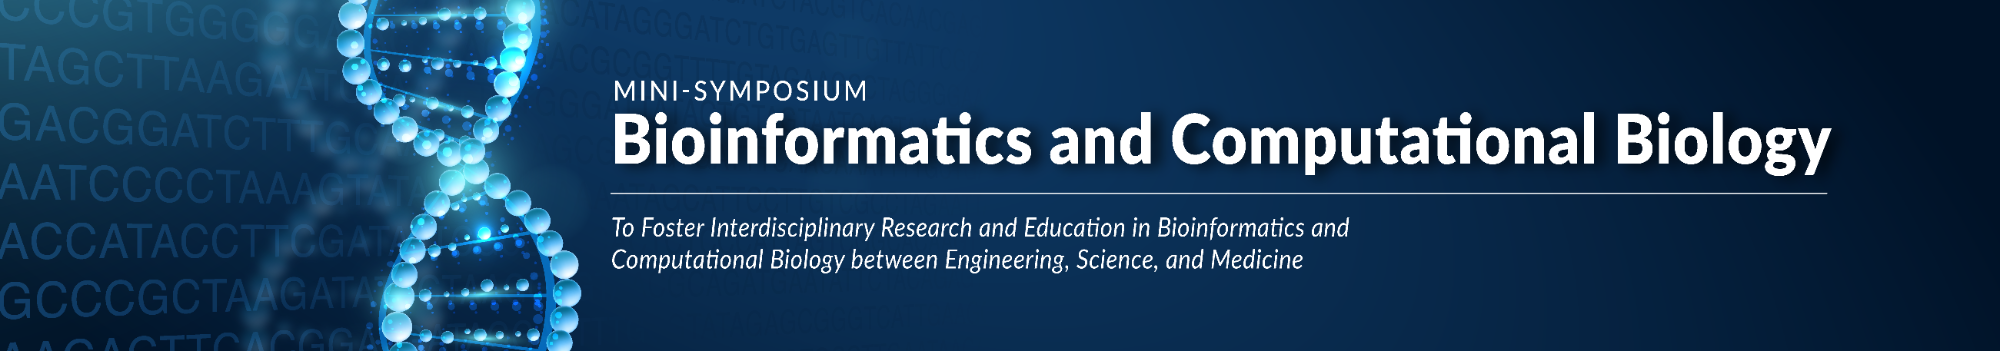 Bioinformatics  and Computational Biology Mini Symposium Header